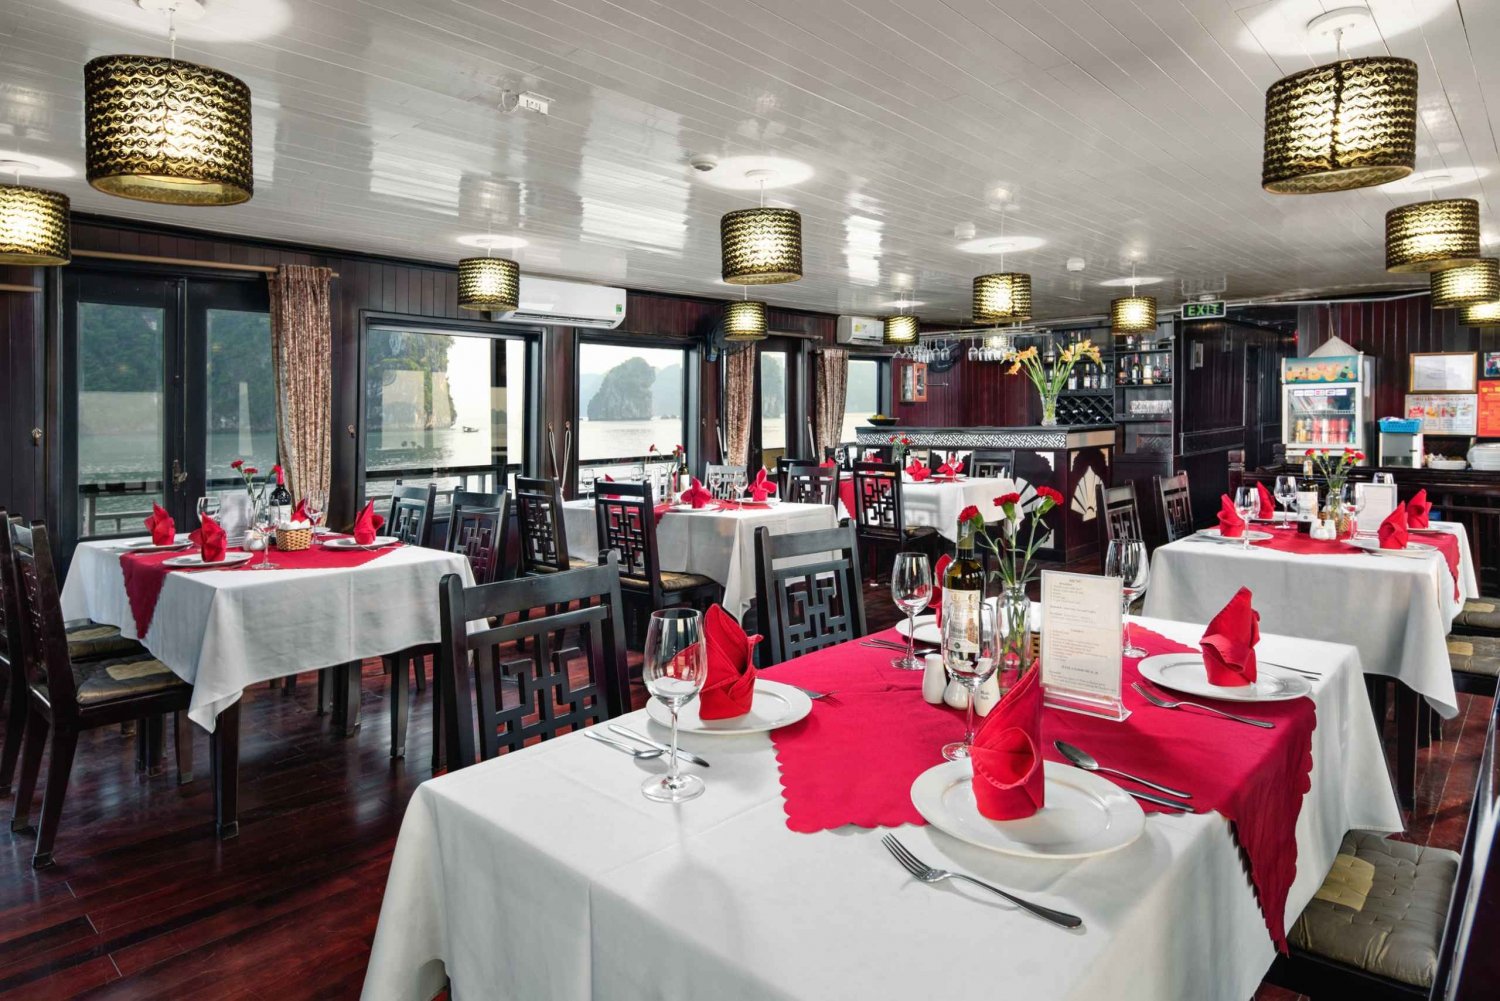 Halong Bay: 4-Star A-Class Legend Cruise 2 Days 1 Night